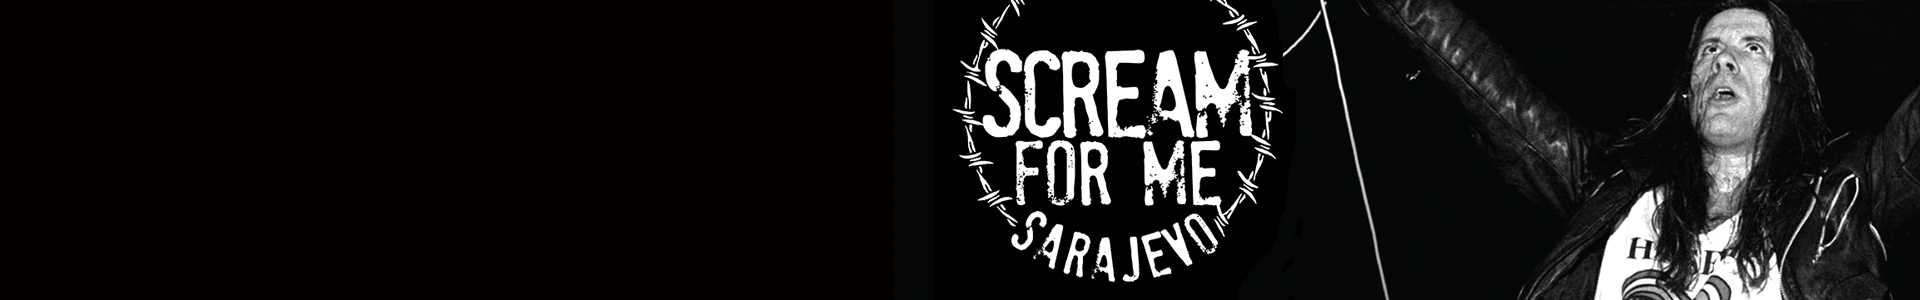 Scream For Me Sarajevo - Theatrical Release